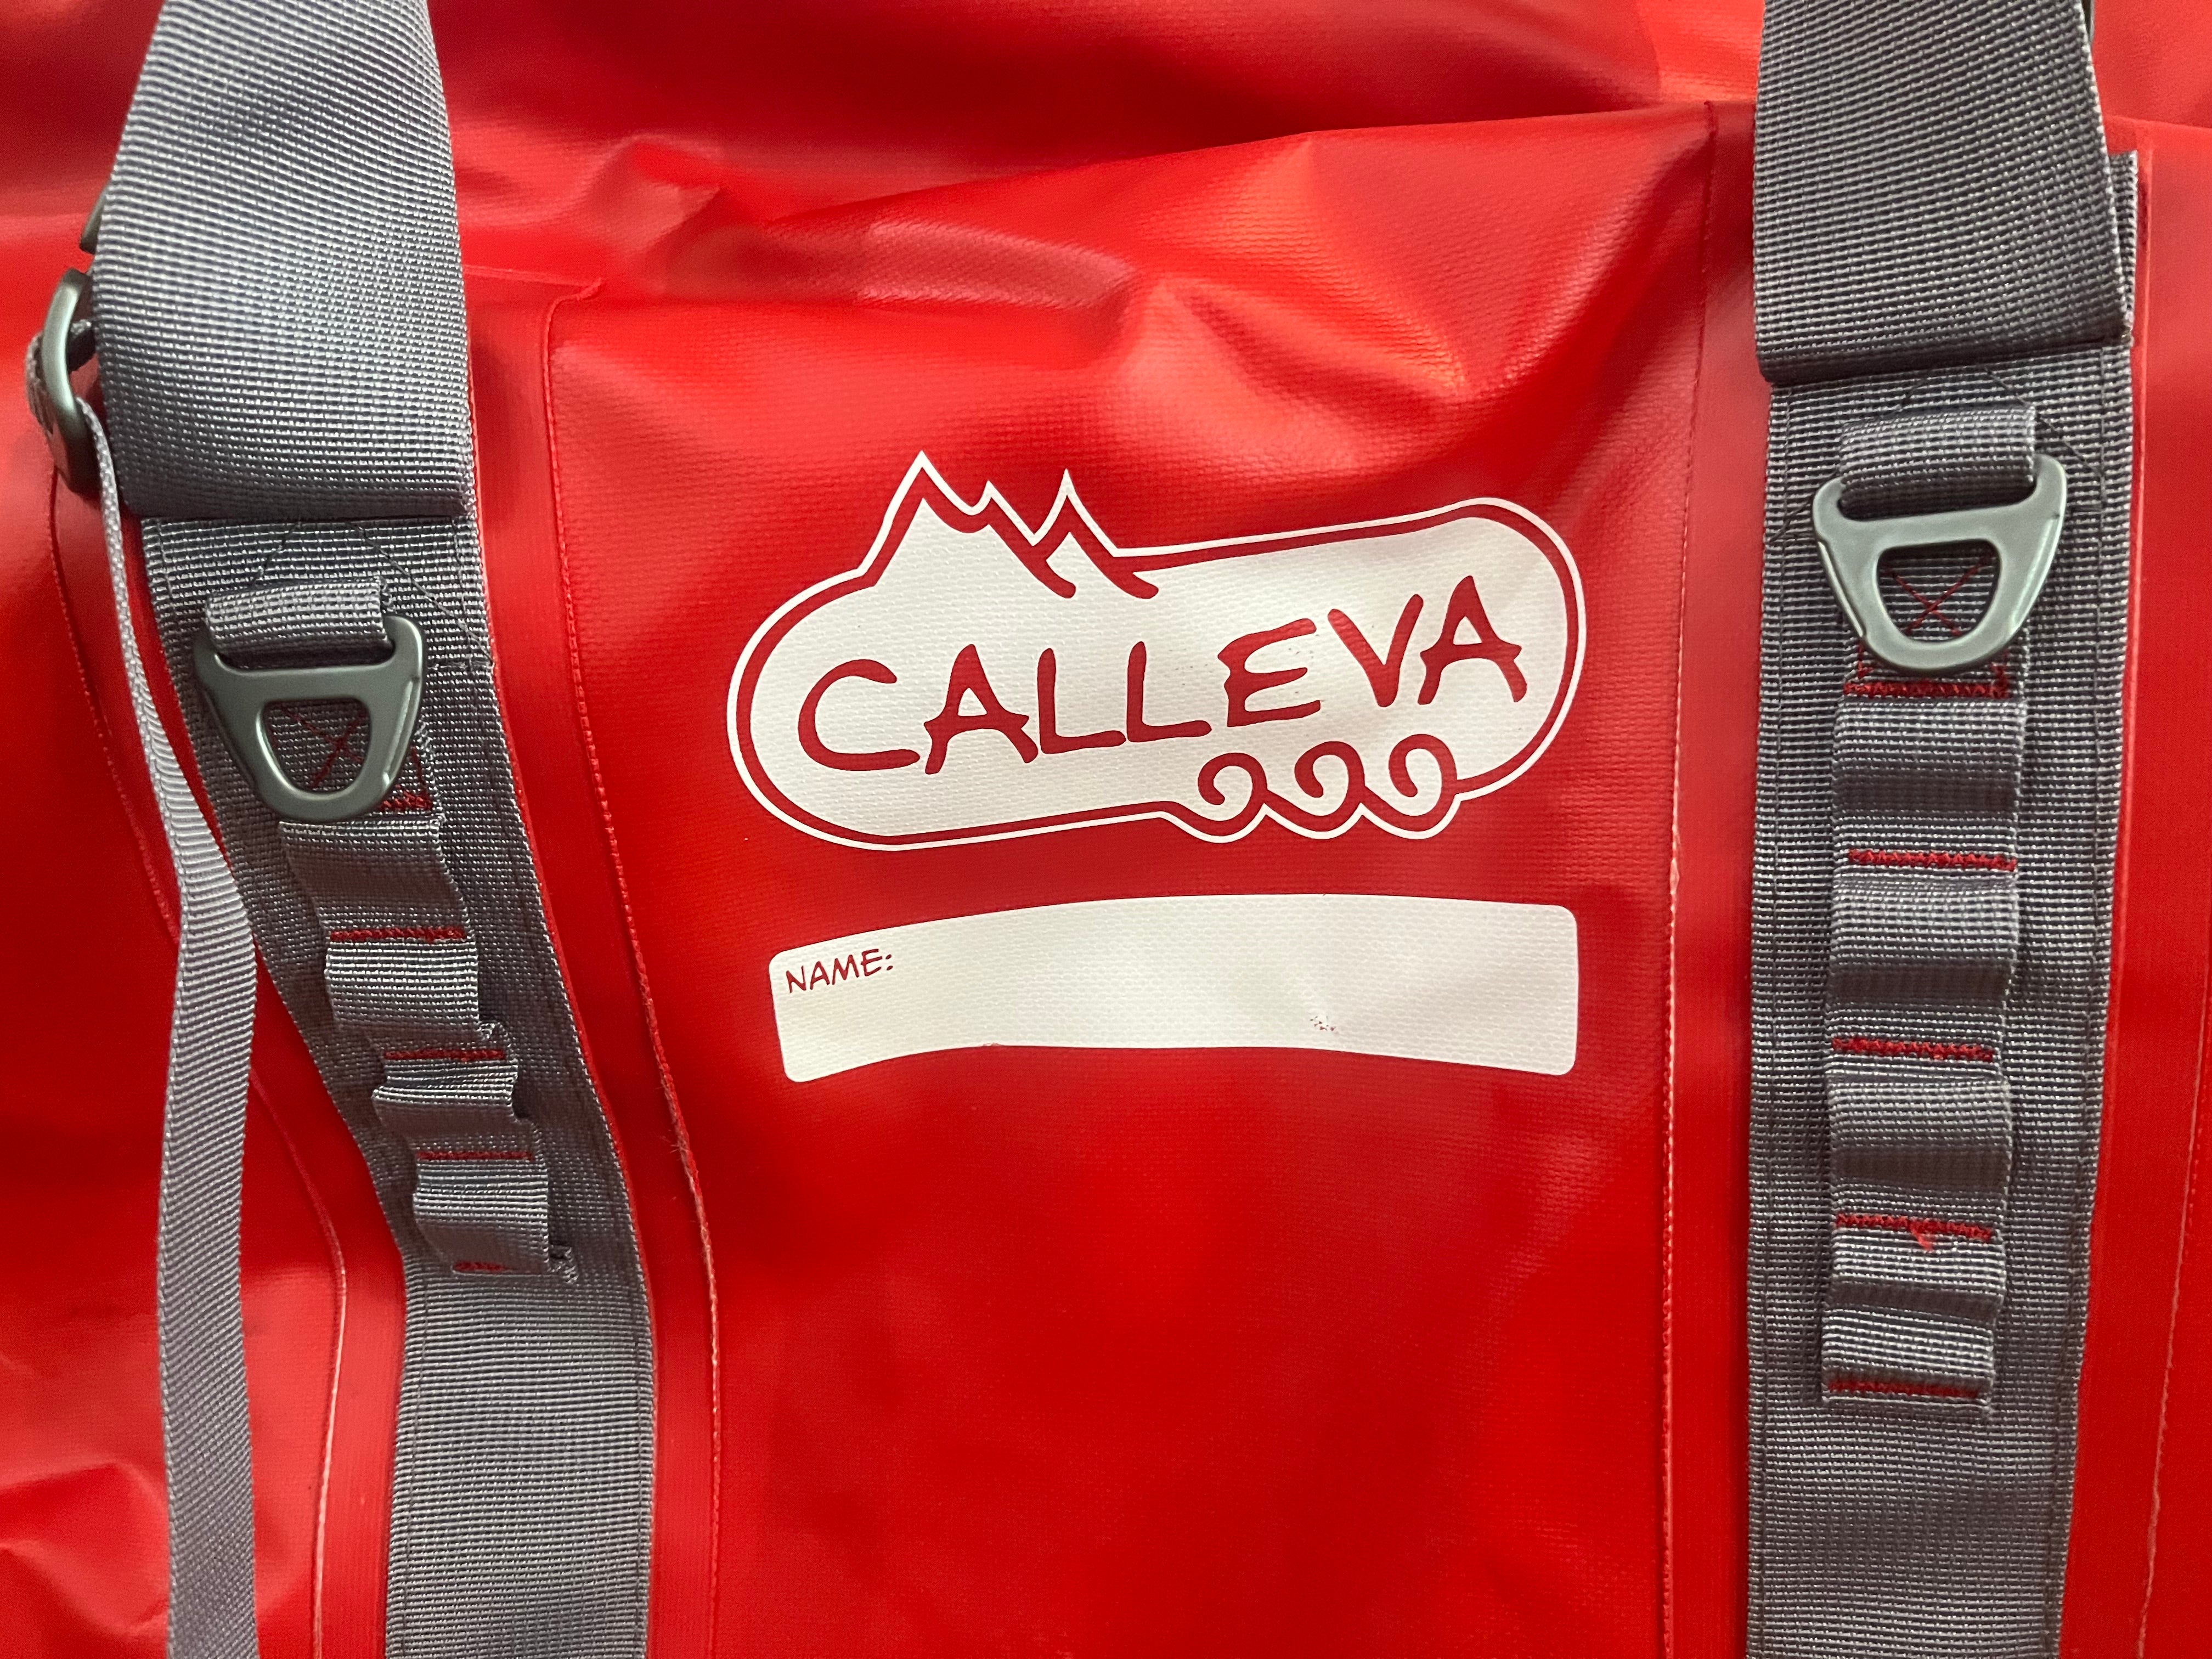 Red NRS High Roll Duffel Dry Bag w/ Custom Calleva Branding